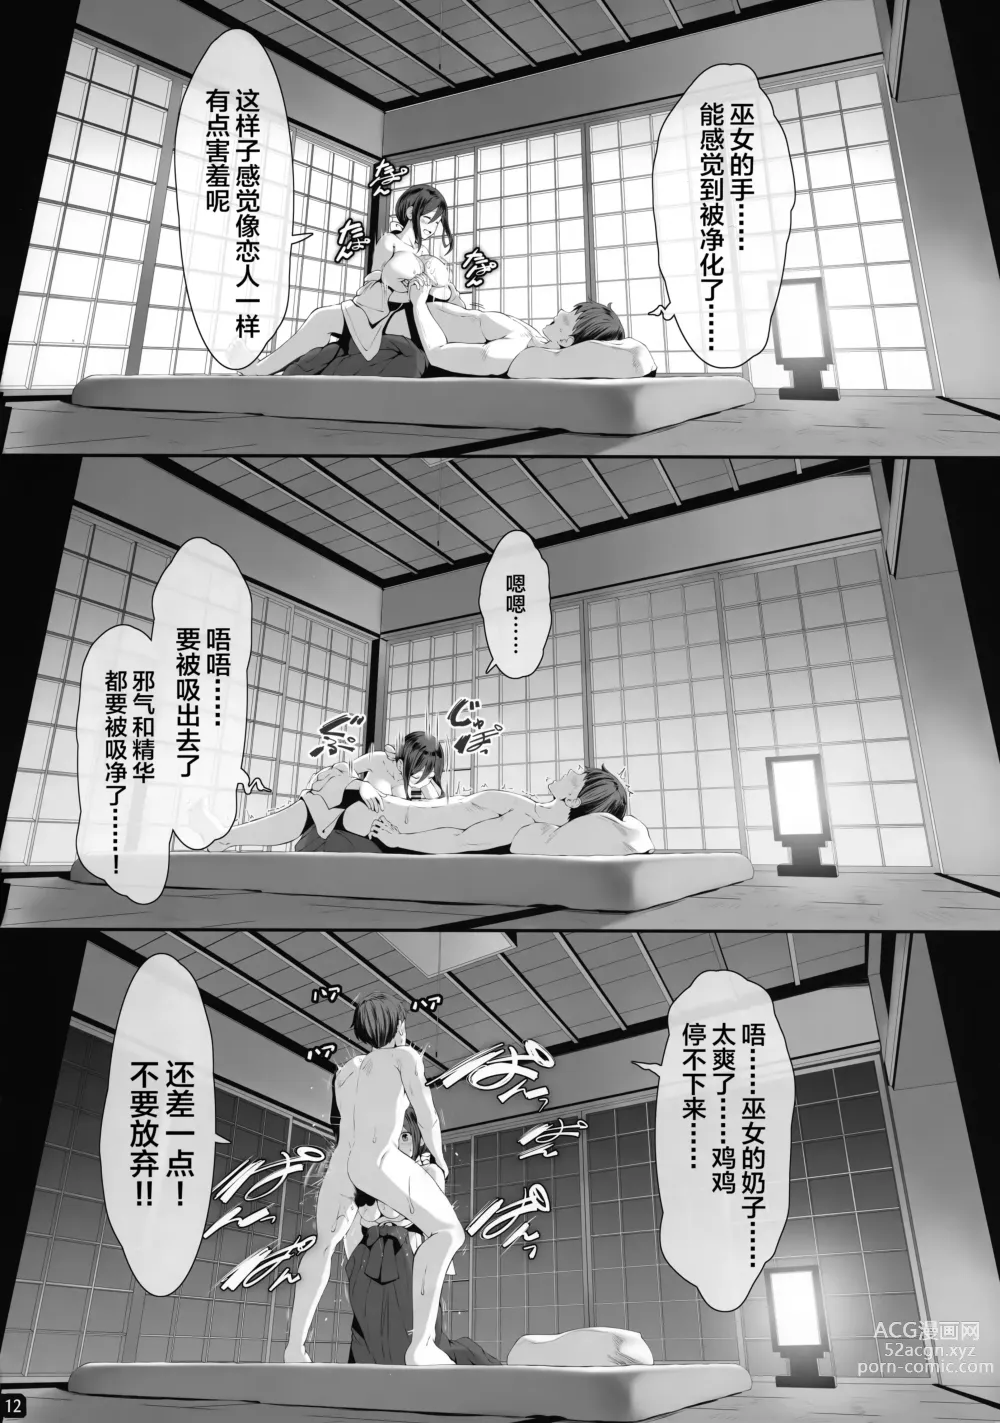 Page 12 of doujinshi Chichi Ari Tani Ari